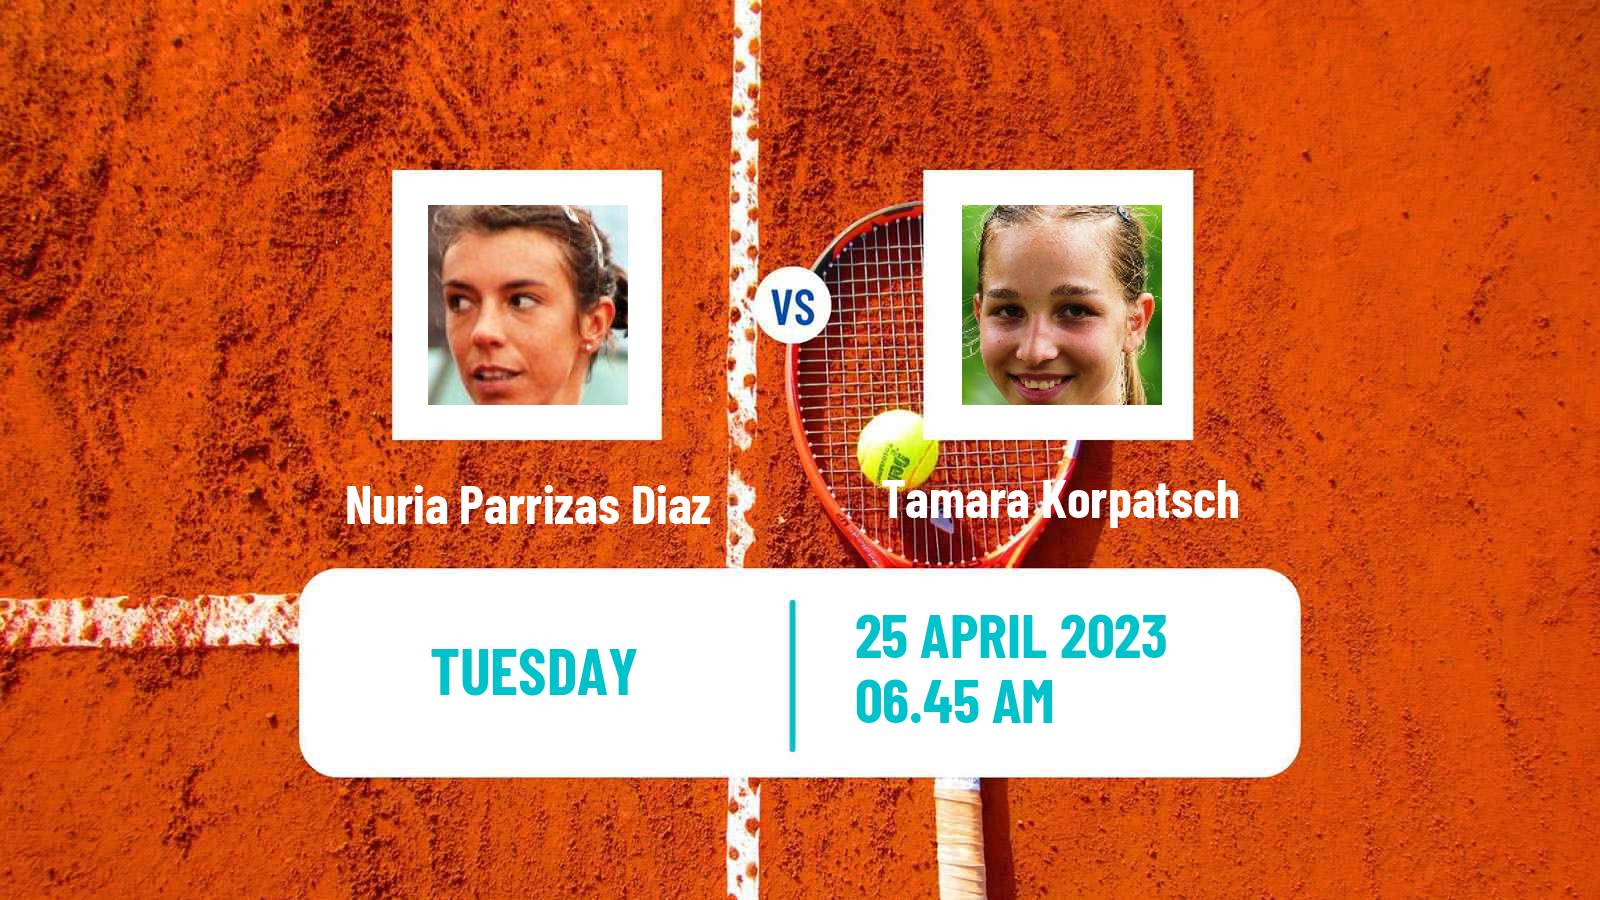 Tennis WTA Madrid Nuria Parrizas Diaz - Tamara Korpatsch